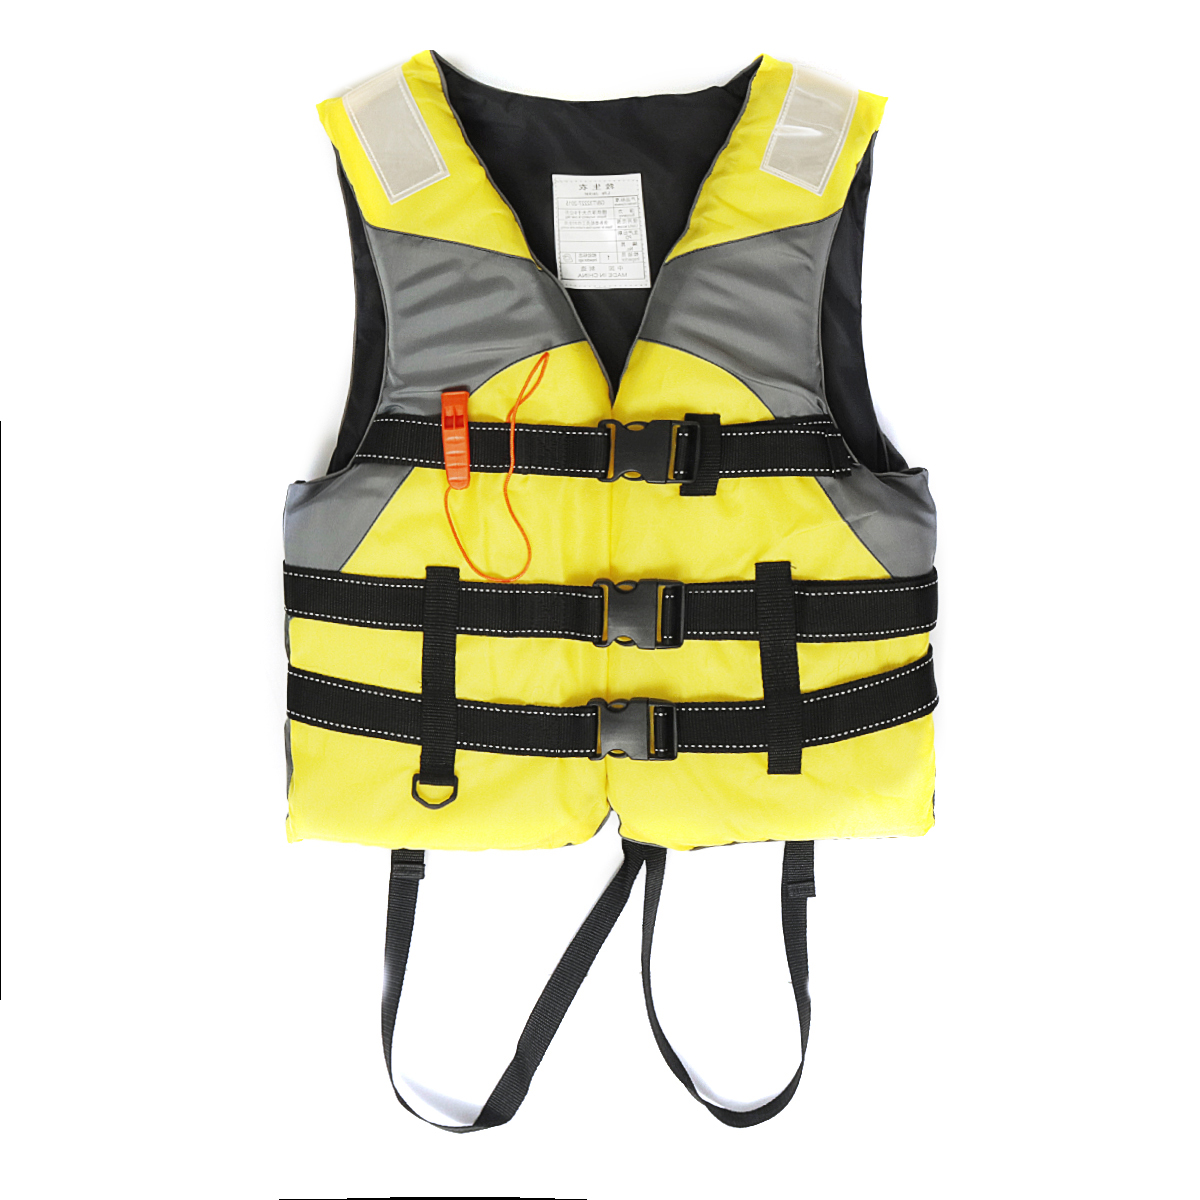 Reflective-Adult-Life-Jacket-Vest-Professional-Fully-Enclosed-Water-Sports-Safty-Aid-Swimwear-Fishin-1640049-10